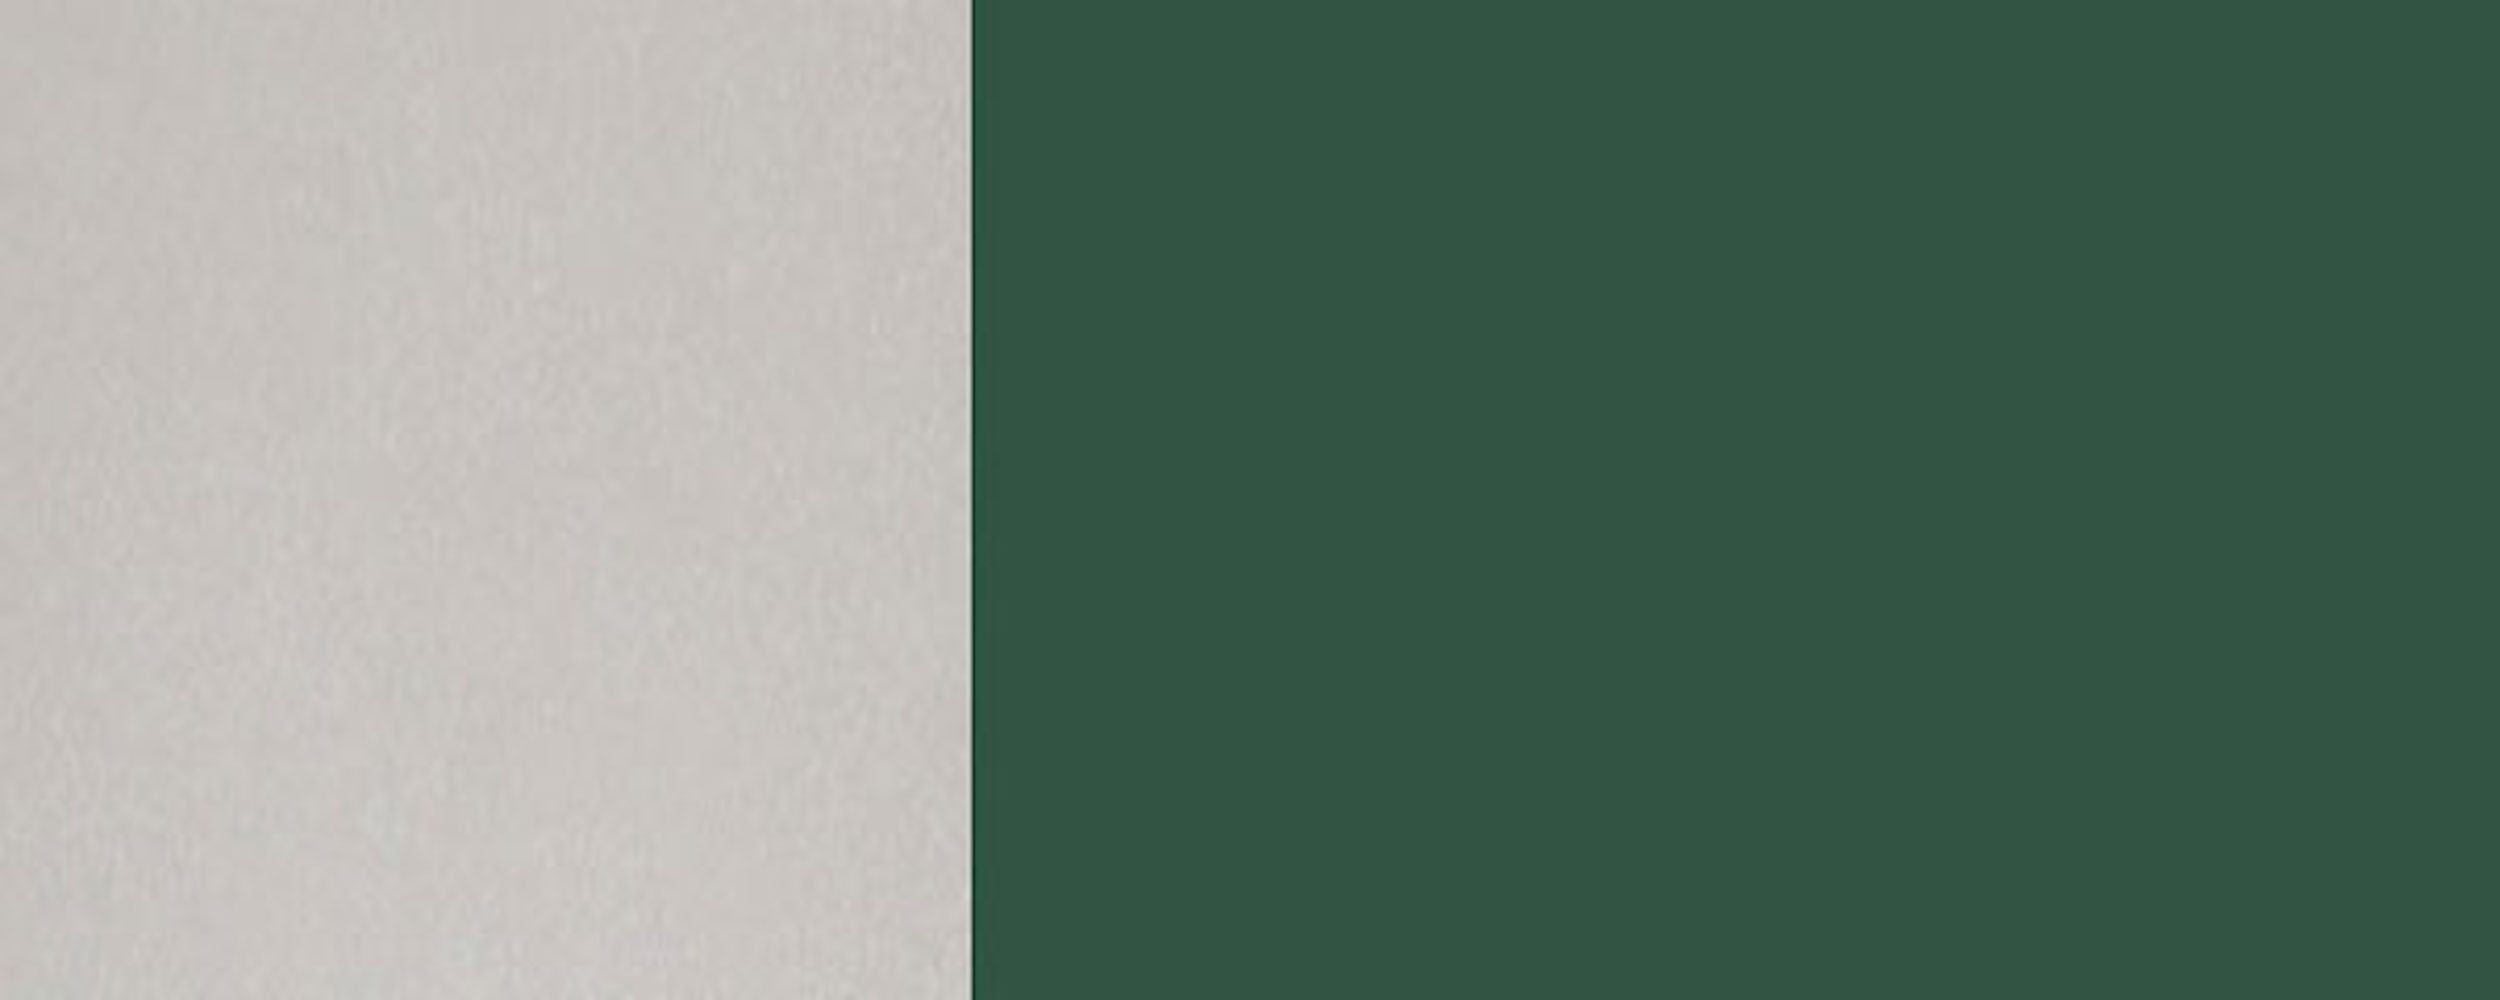 Tivoli Front- und matt 1-türig kieferngrün Korpusfarbe (Tivoli) Klapphängeschrank Feldmann-Wohnen wählbar 60cm